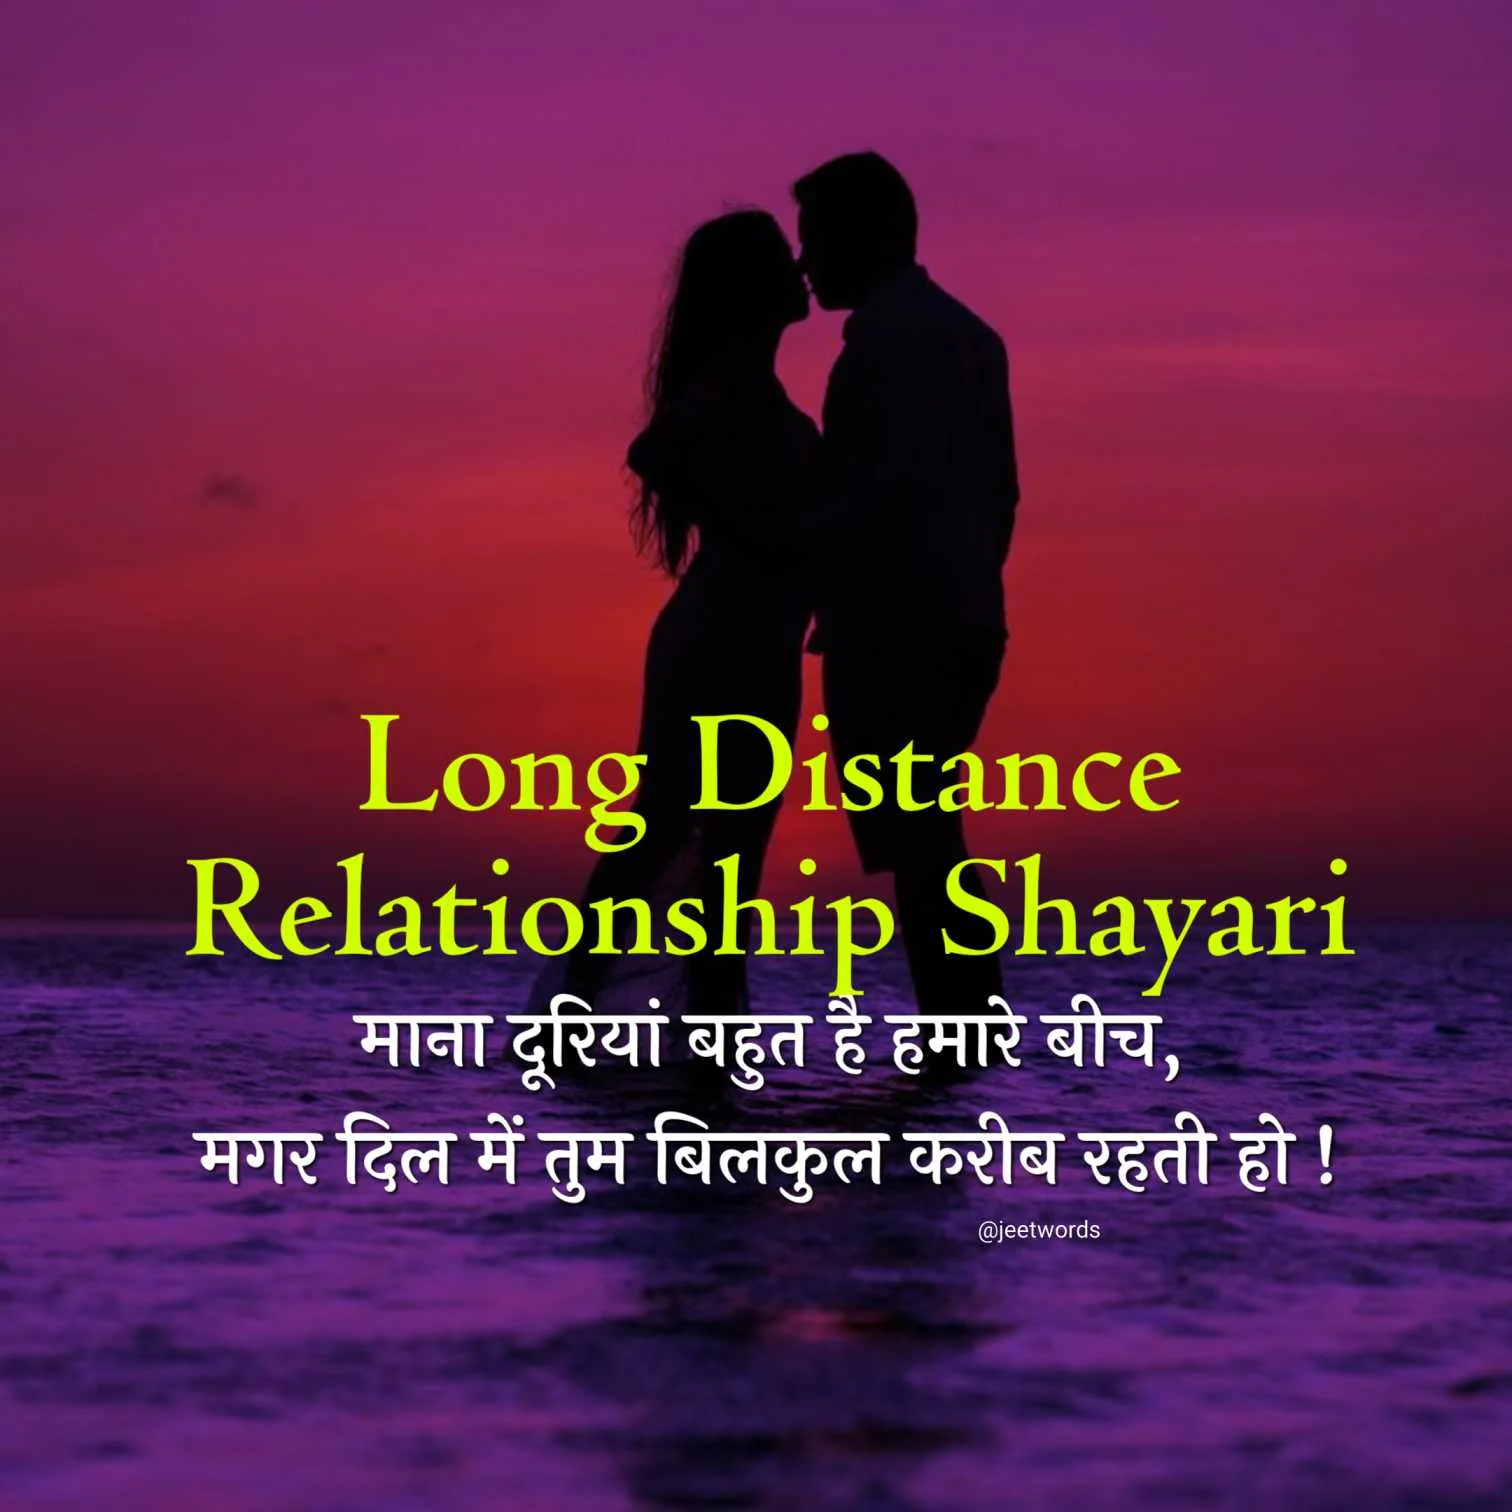 Long Distance Relationship Shayari Photo